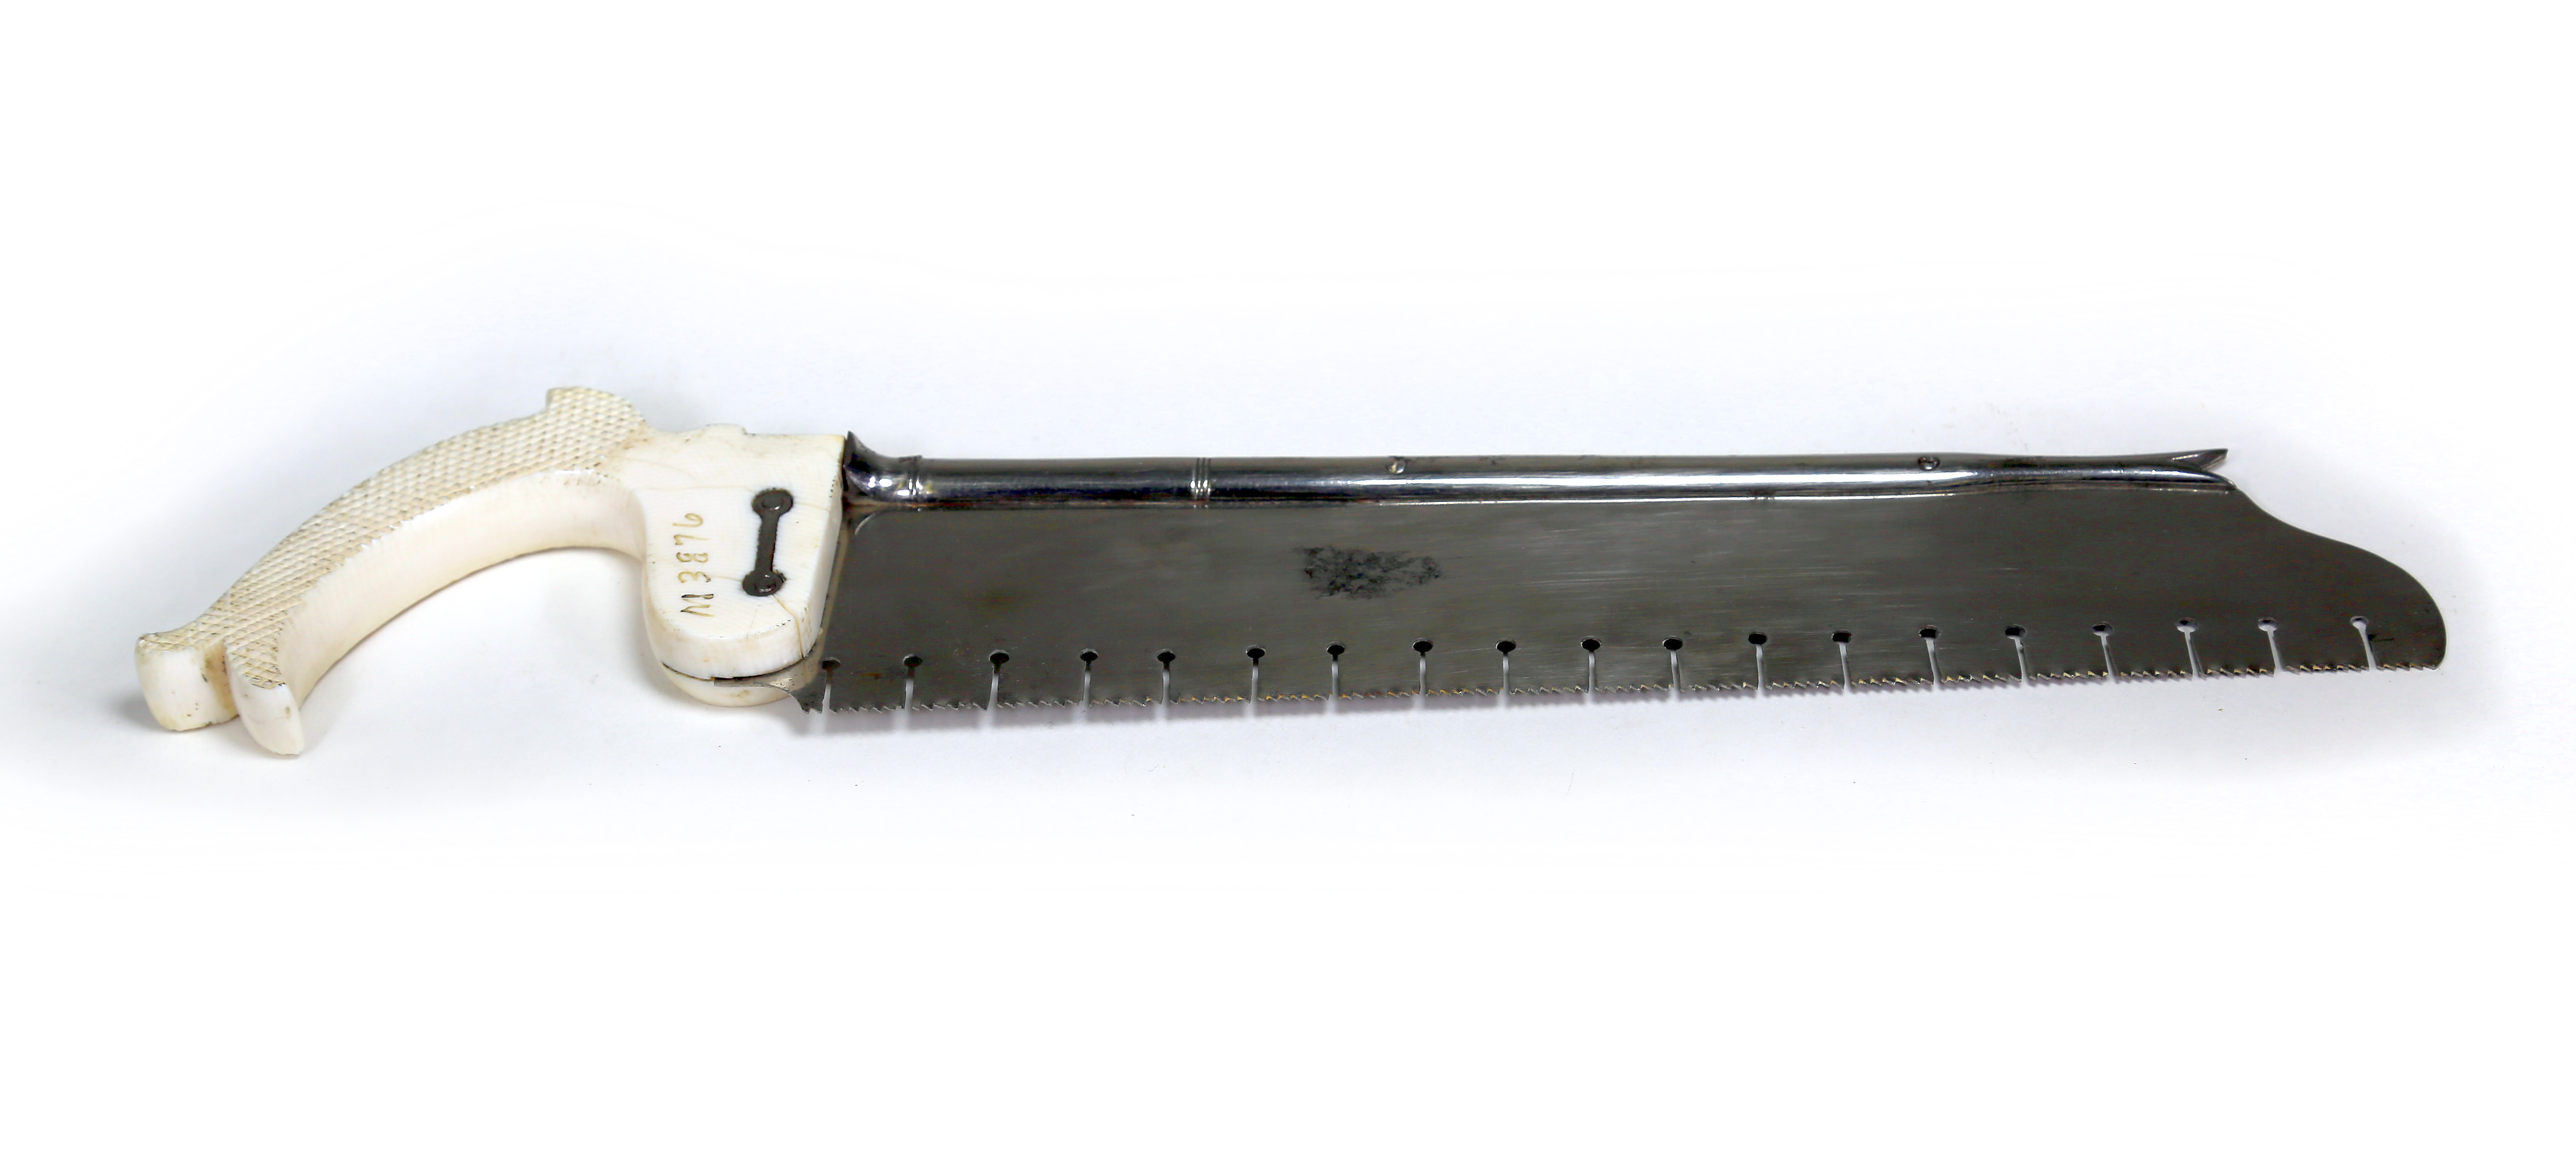 Nickel-Plated Steel Scissors H-1794 - Uline